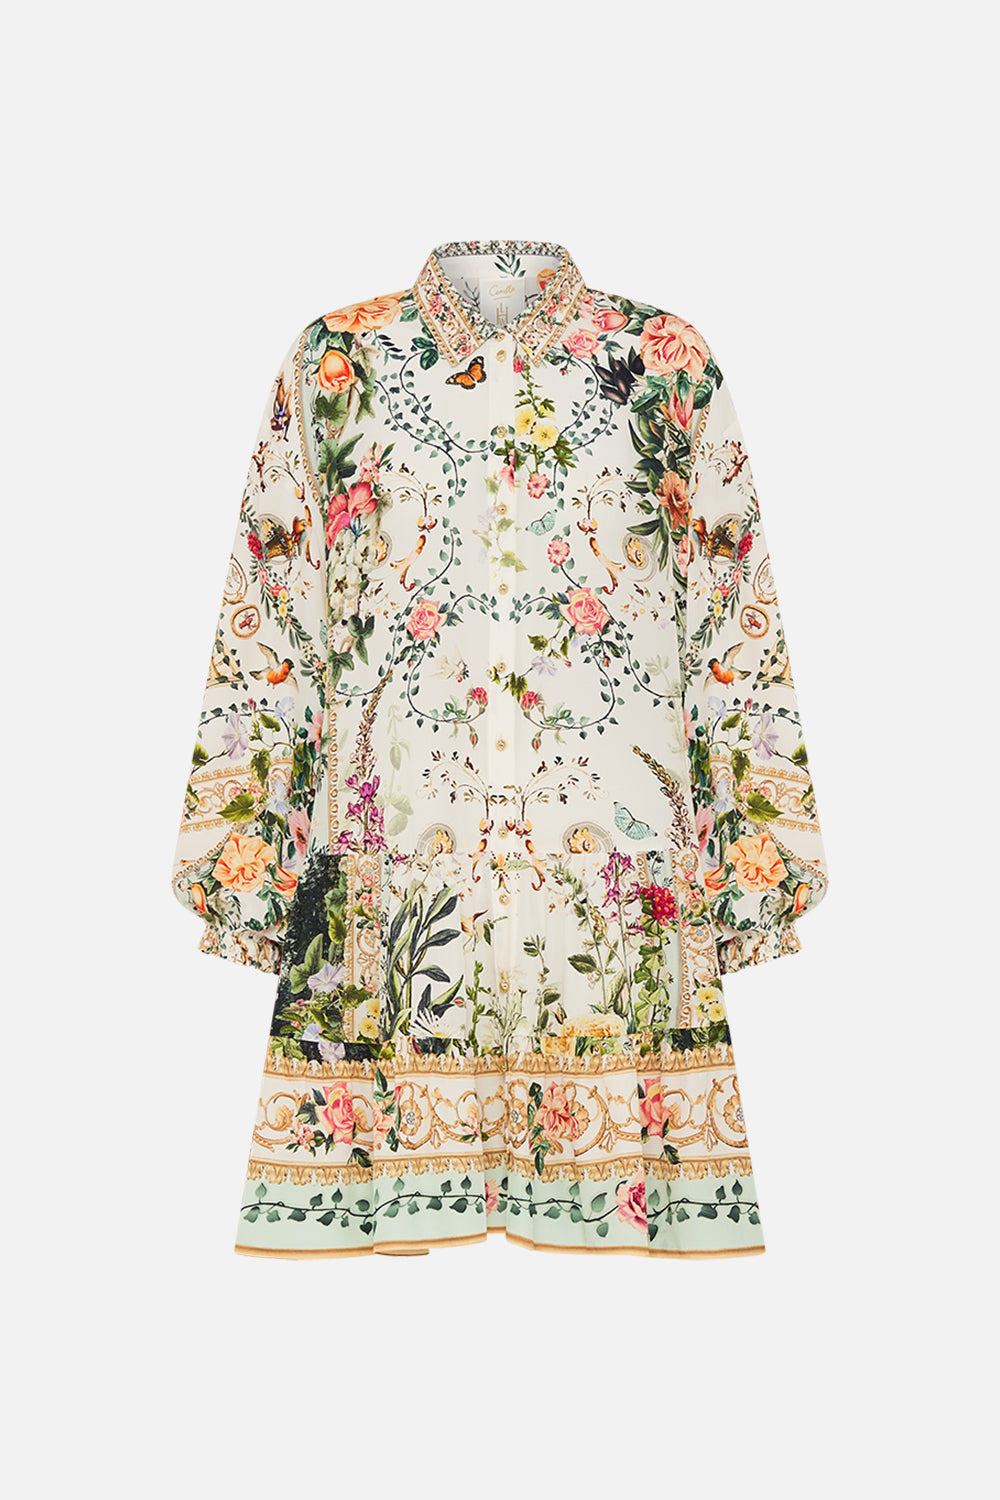 Product view of CAMILLA silk shirt dress in Renaissance Romance print